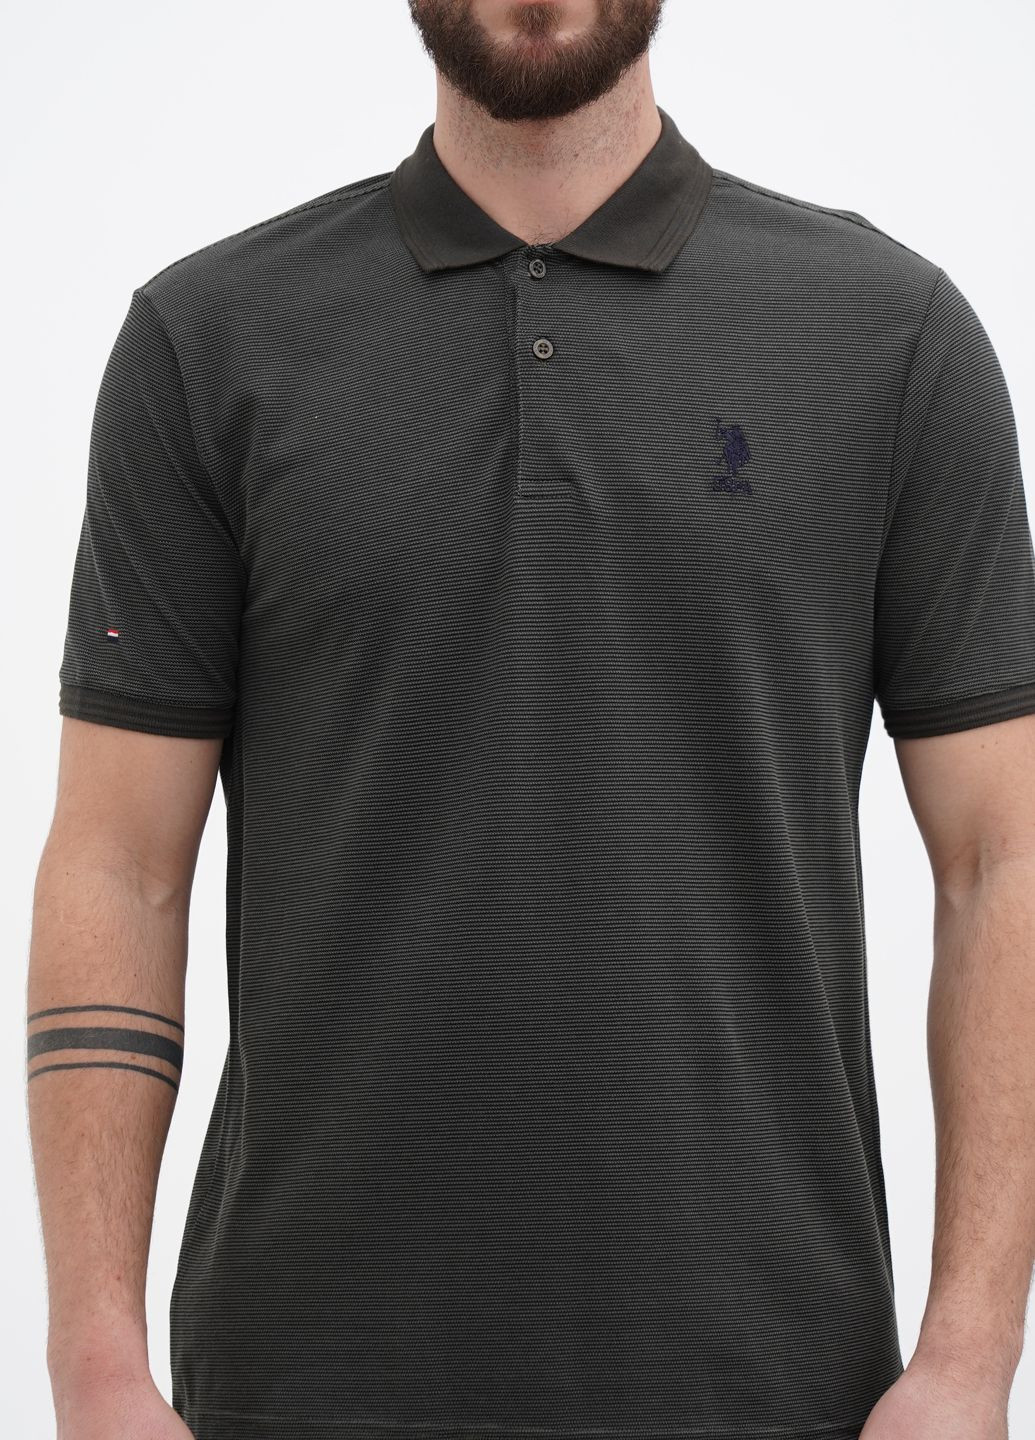 Хаки (оливковая) футболка поло мужское U.S. Polo Assn.